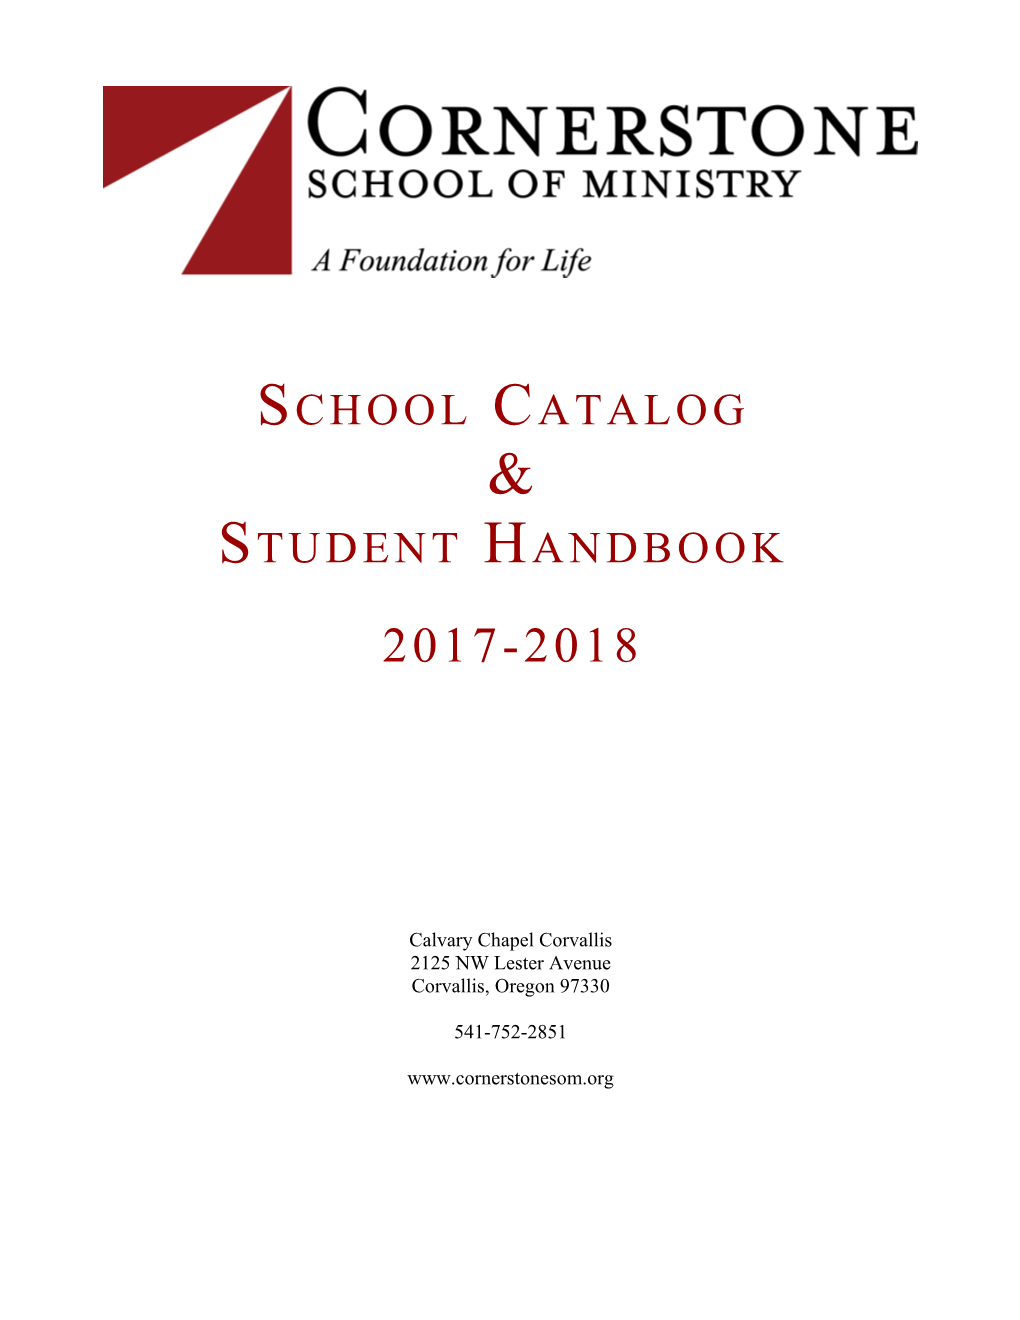 CC School Catalog & Student Handbook 2016-2017